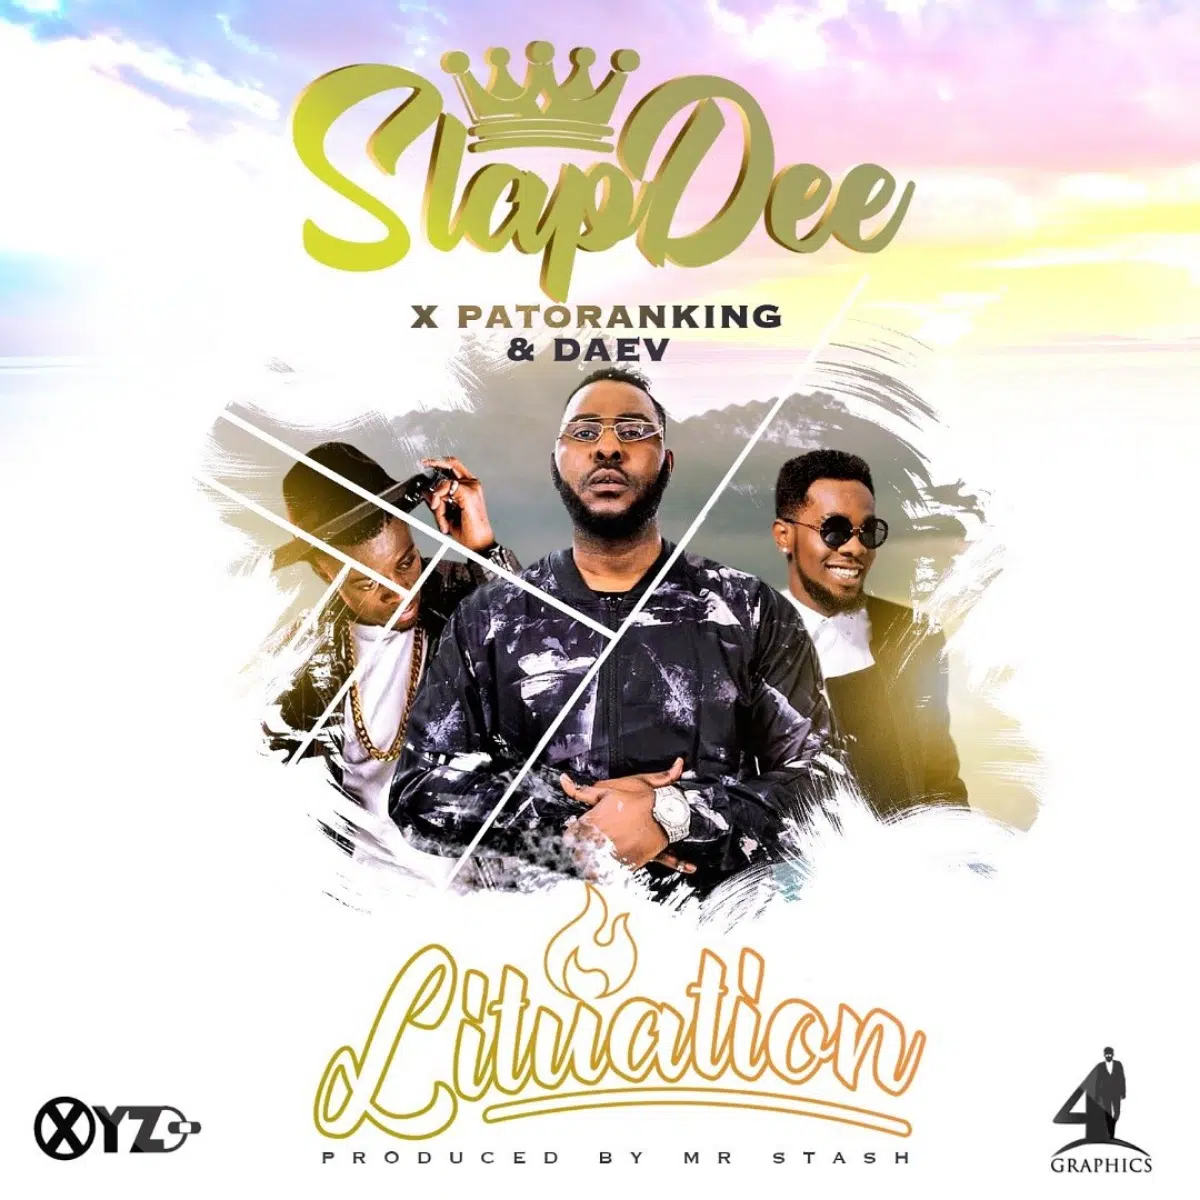 DOWNLOAD: Slap Dee Ft Patoranking & Daev Zambia – “Lituation” Video + Audio Mp3